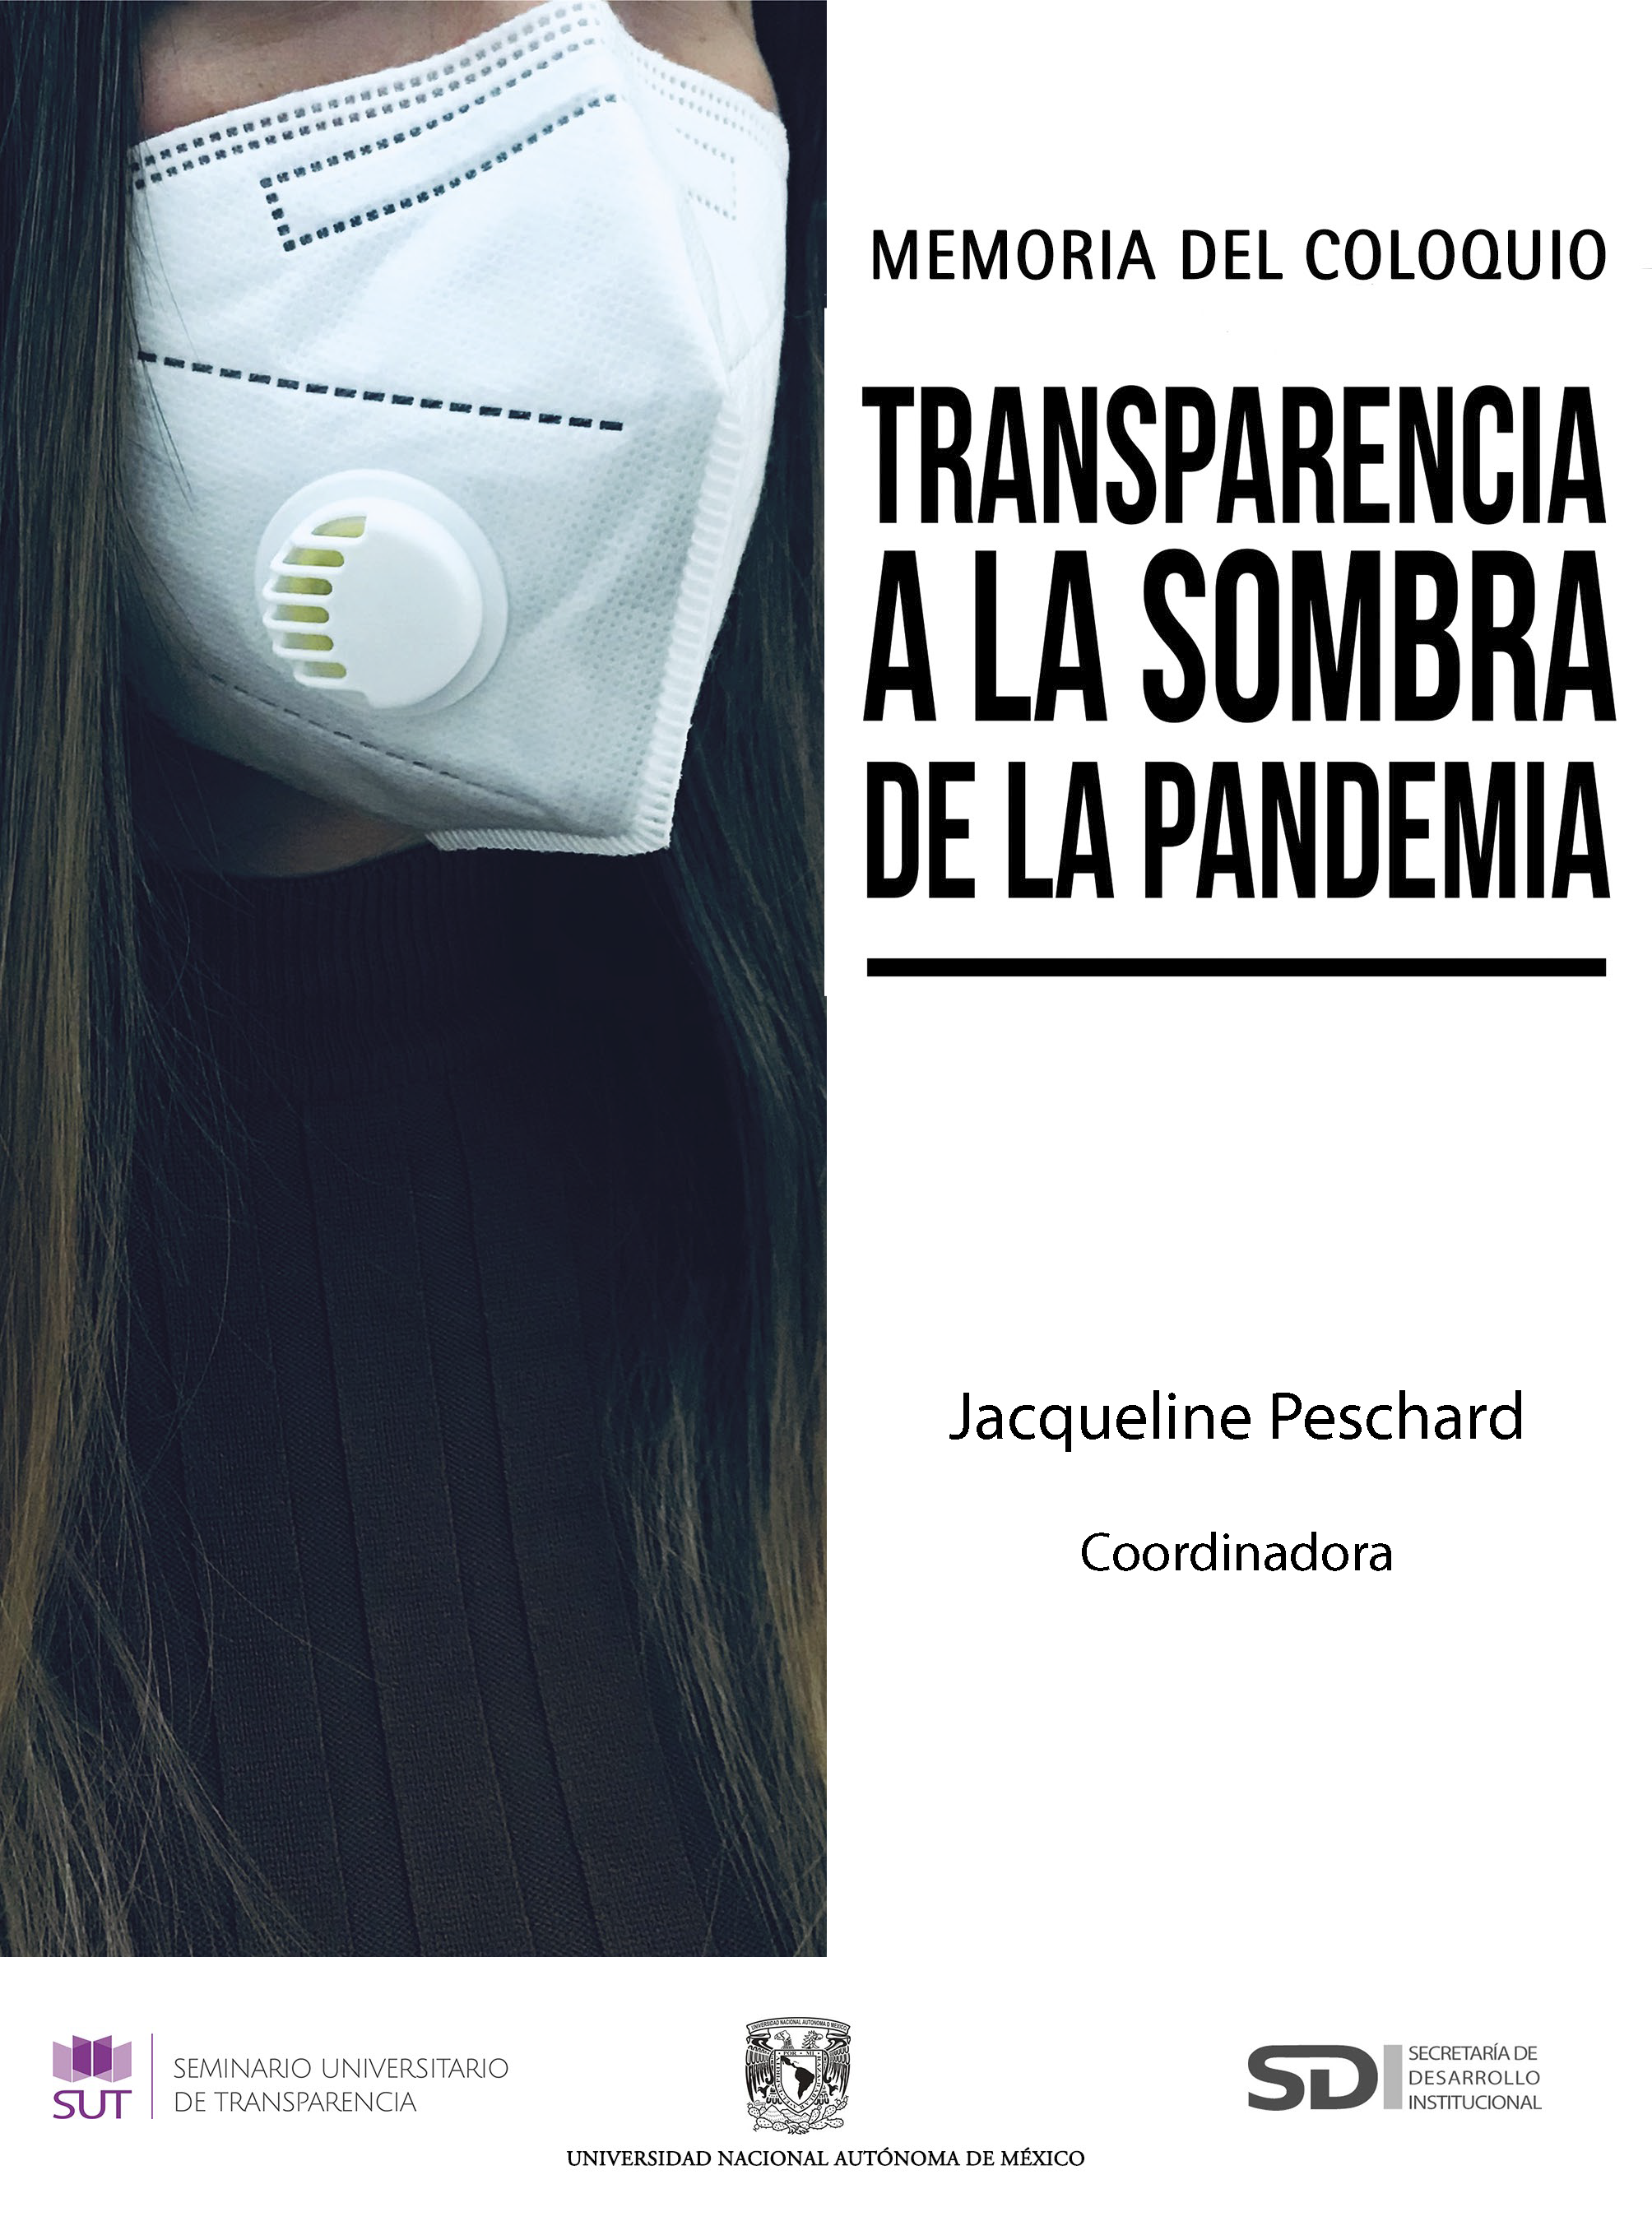 TransparenciaSombraPandemia_SUT.png